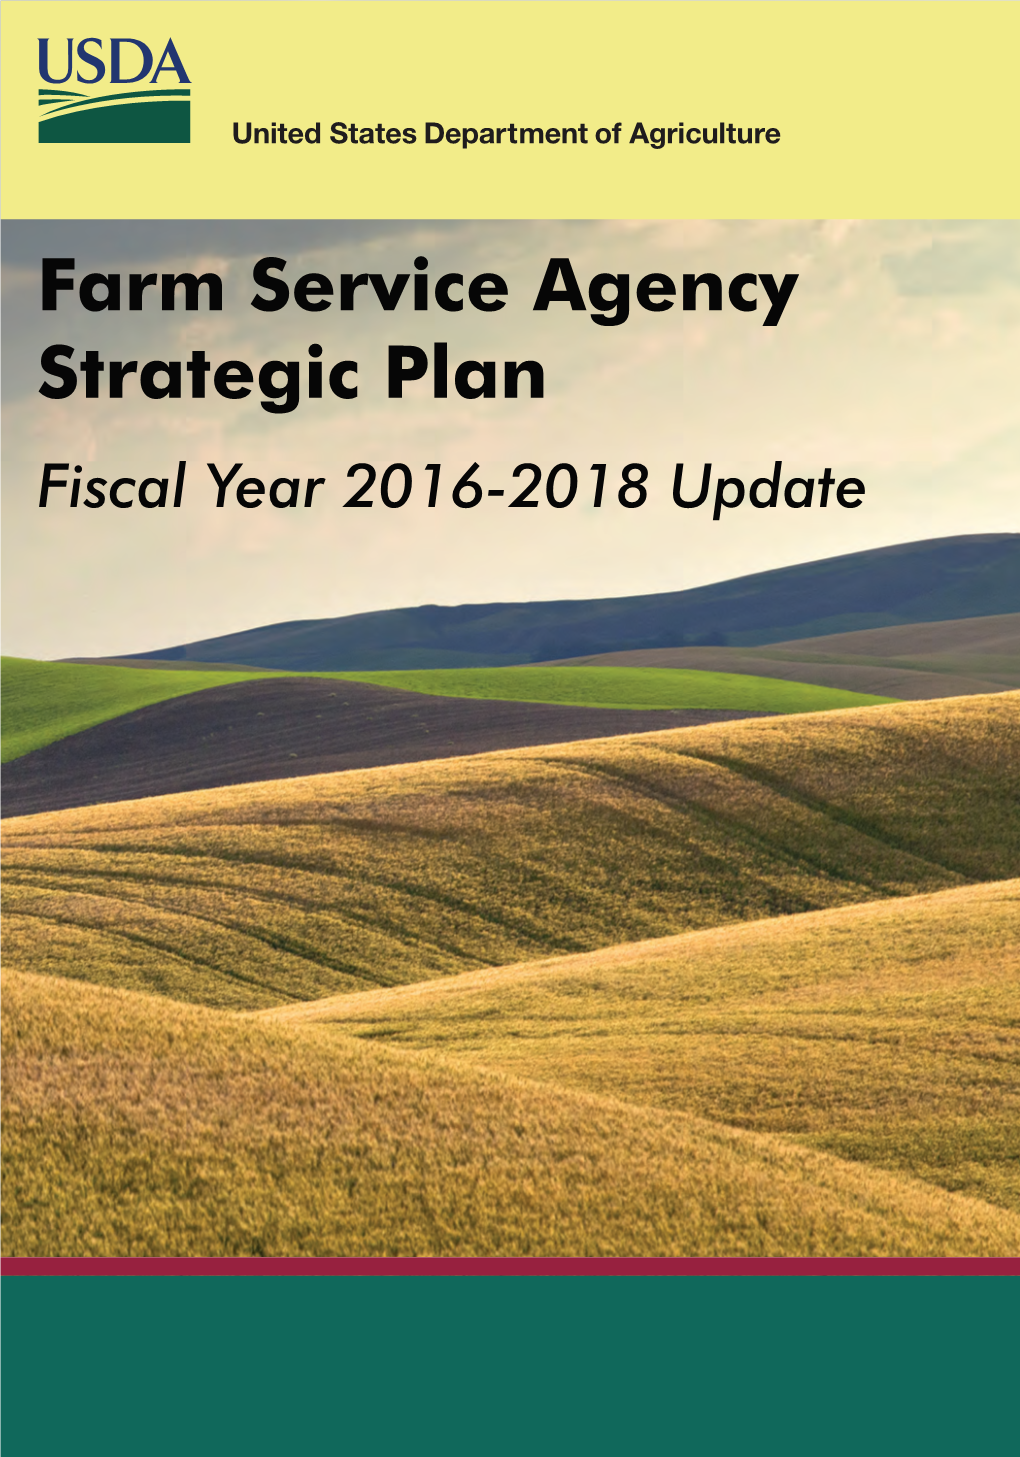 FSA's Strategic Plan Goals